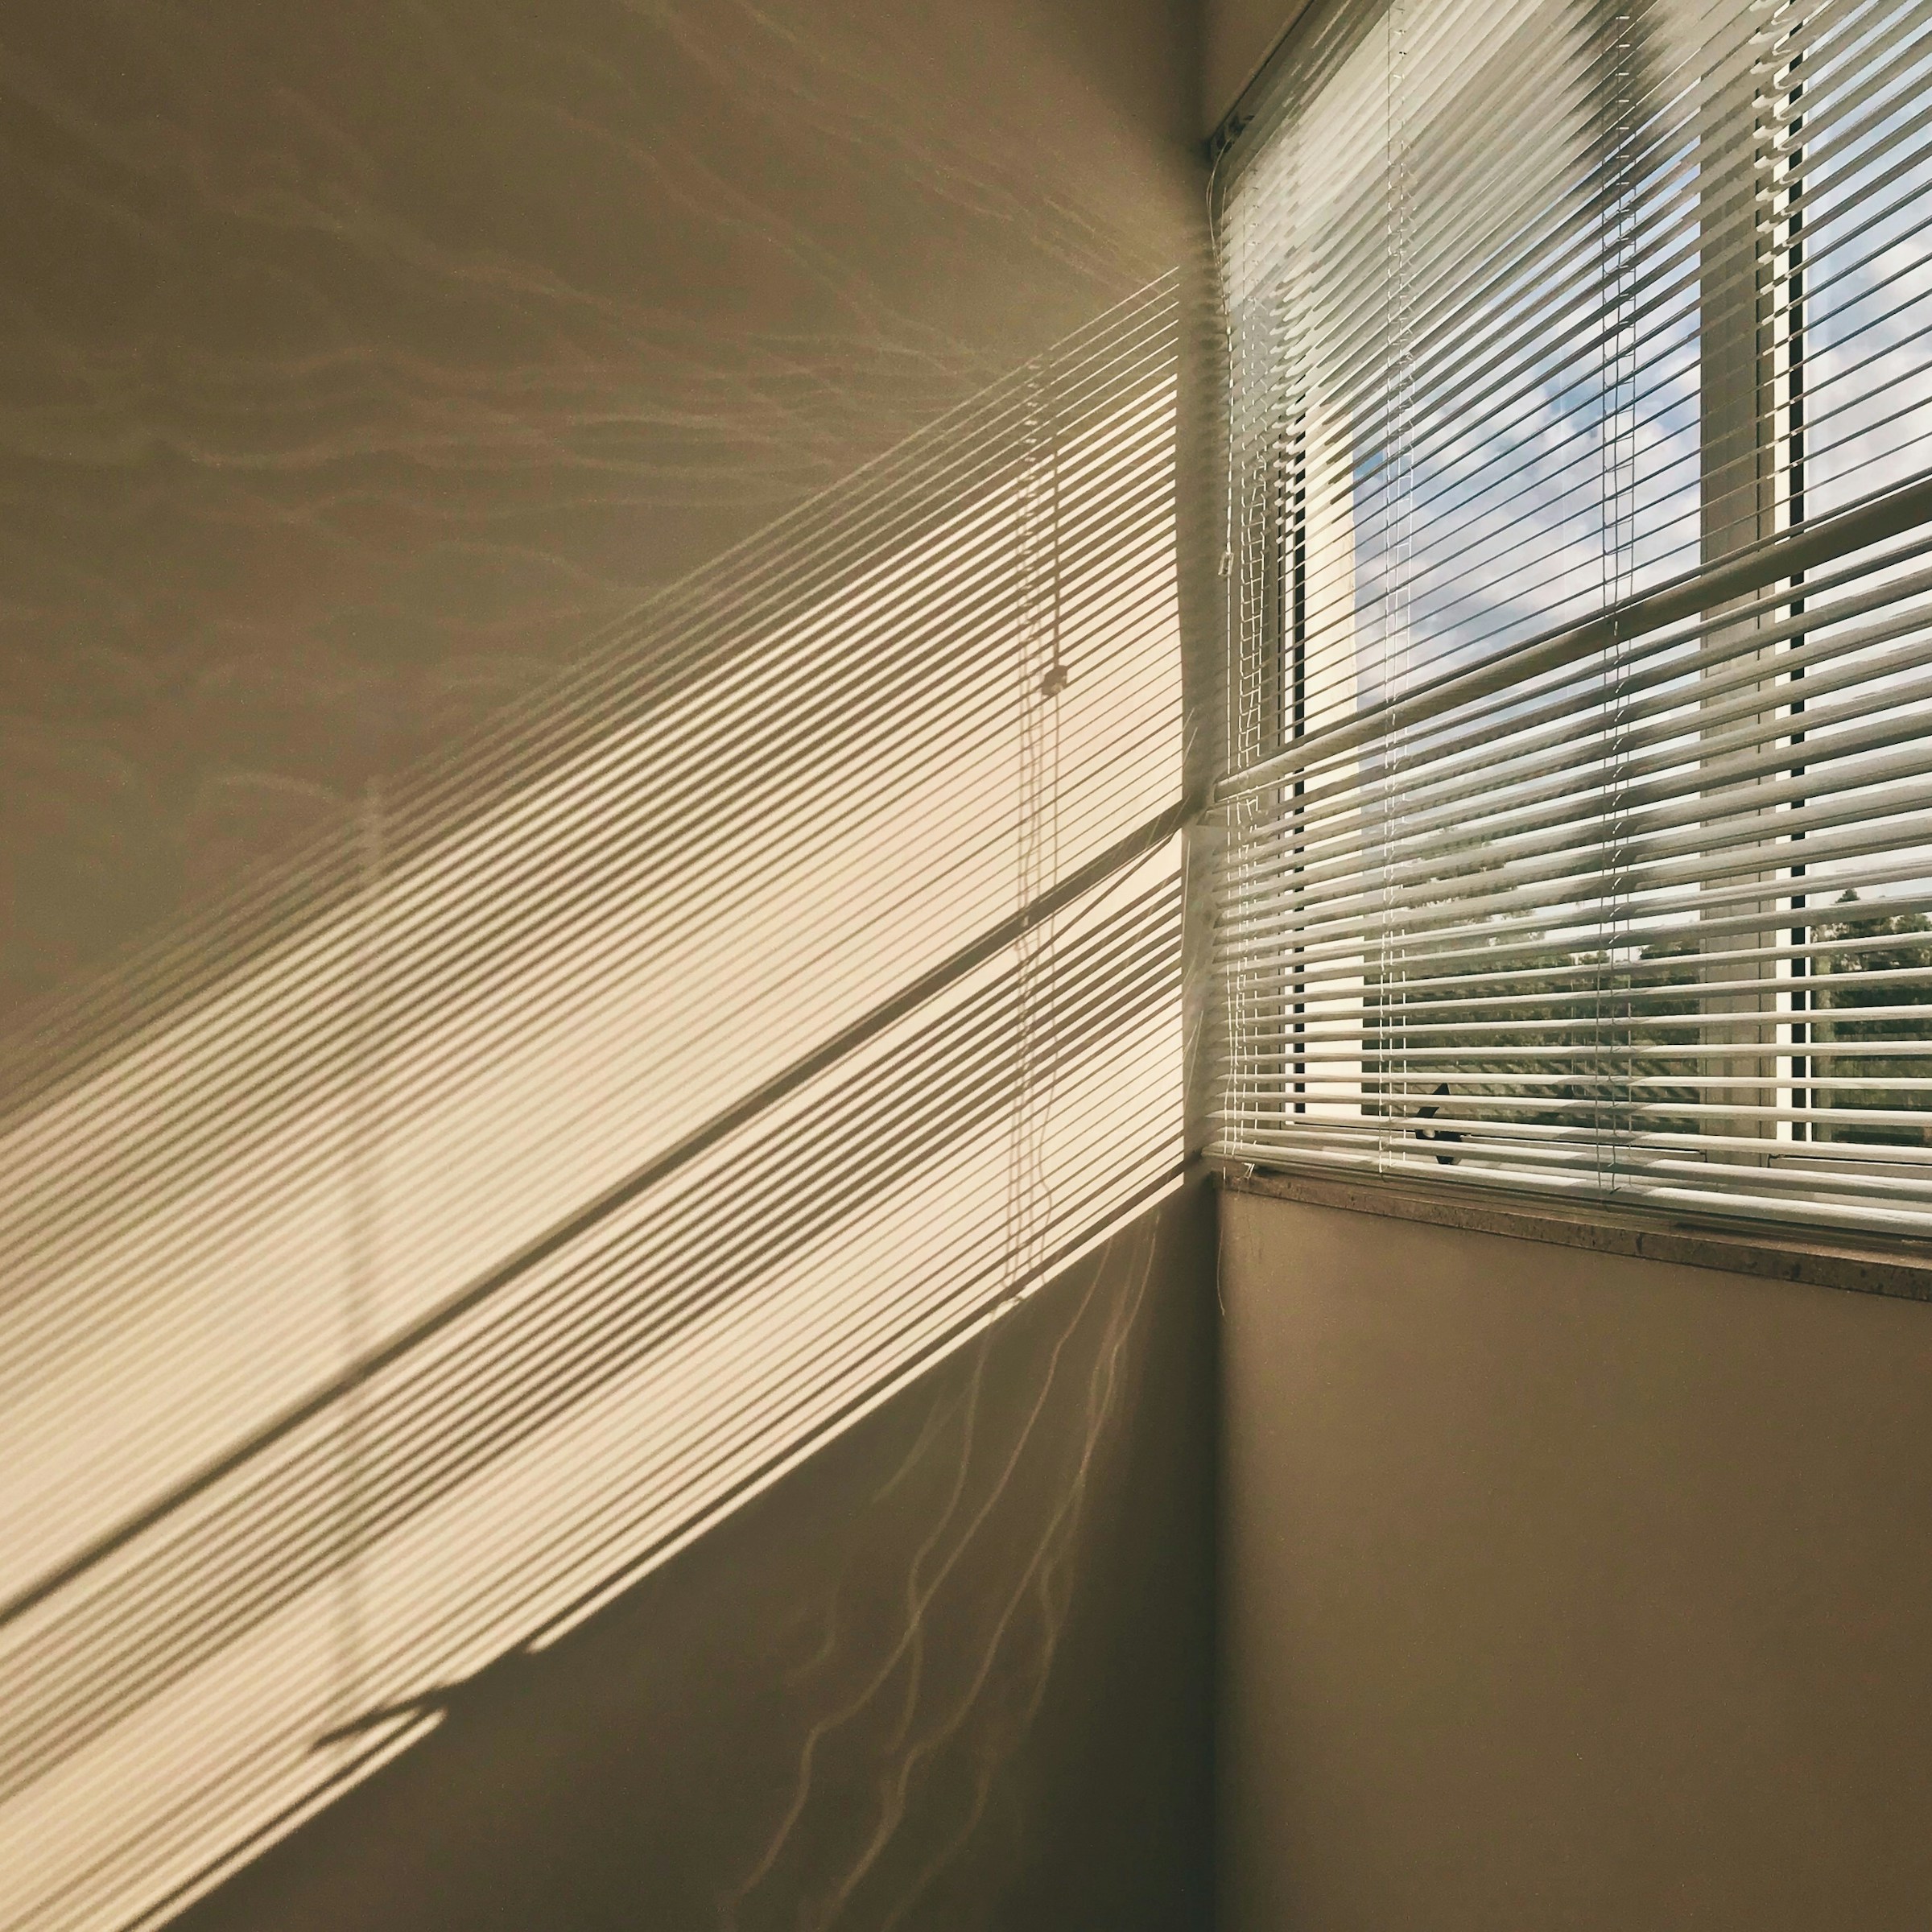 Sunlight through blinds | Source: Unsplash